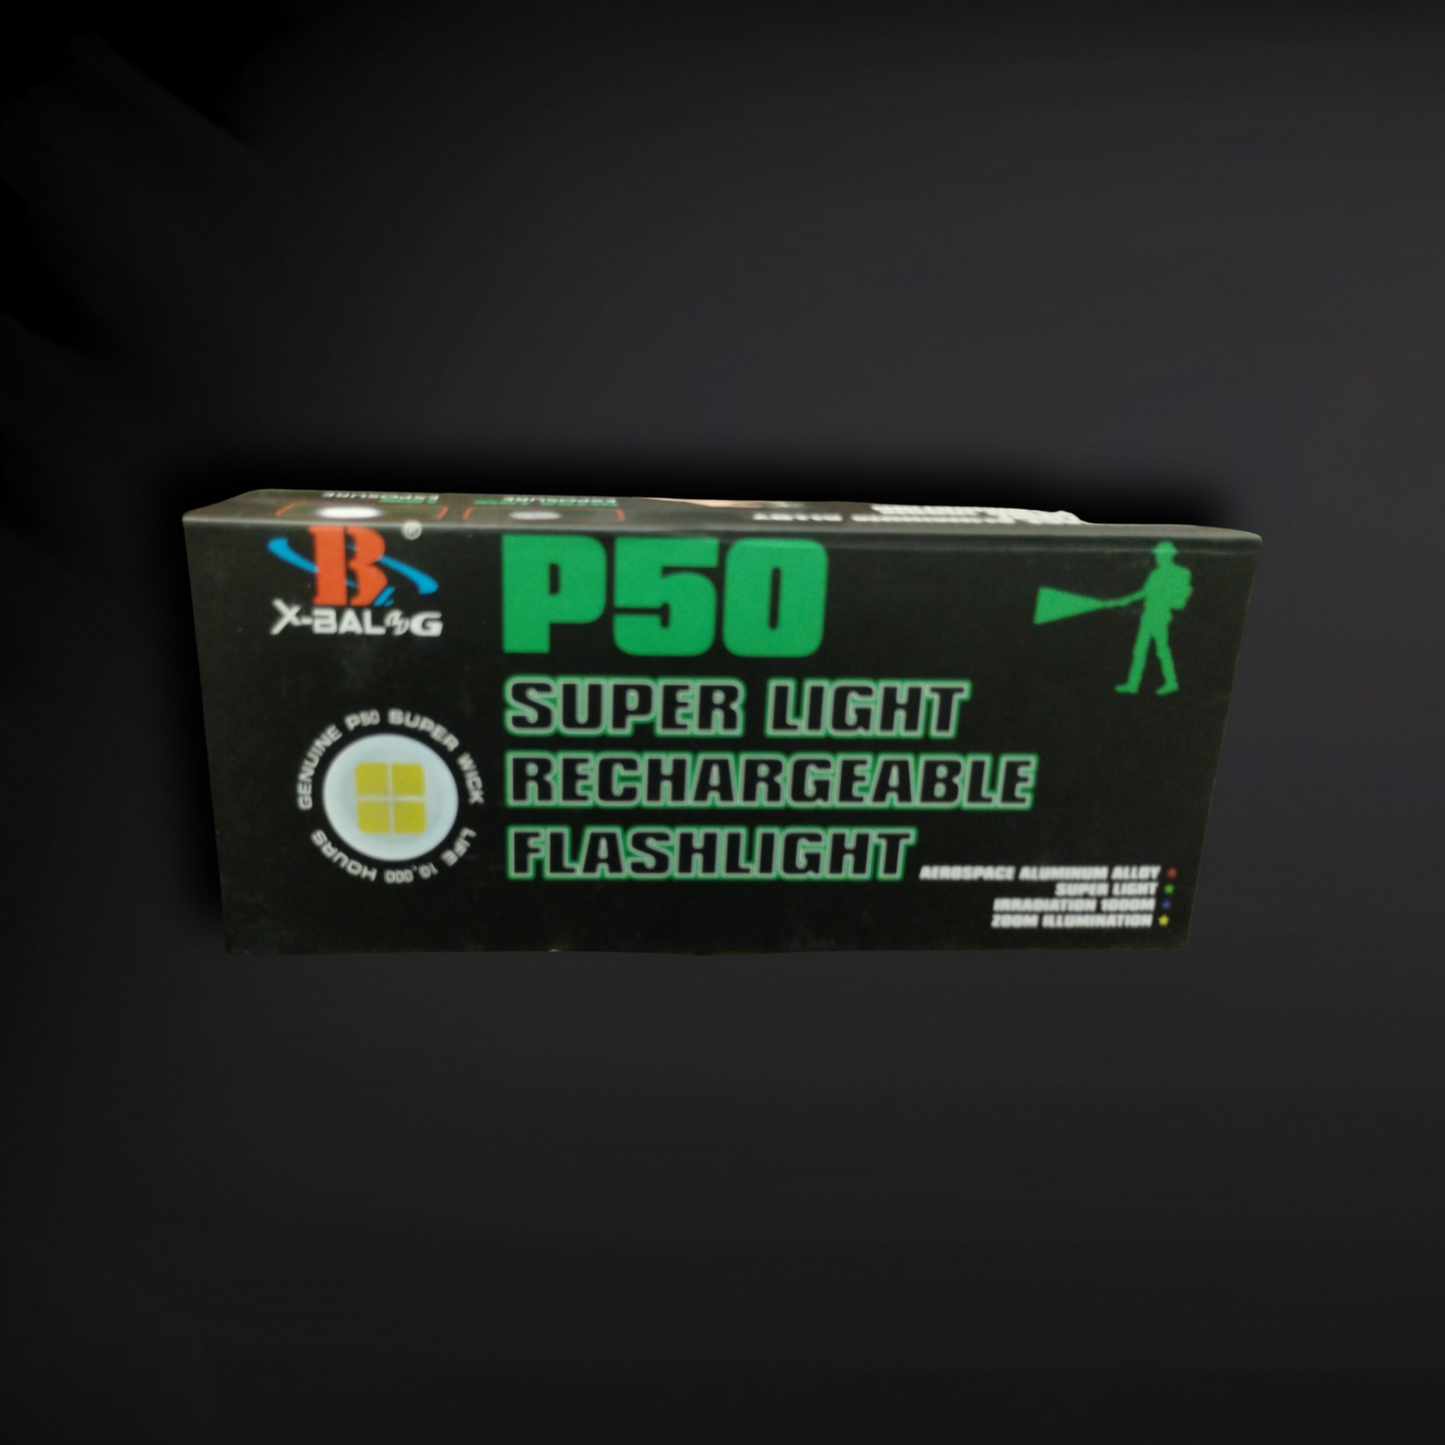 P50 Super Light Rechargeable Flashlight - Zack Wholesale